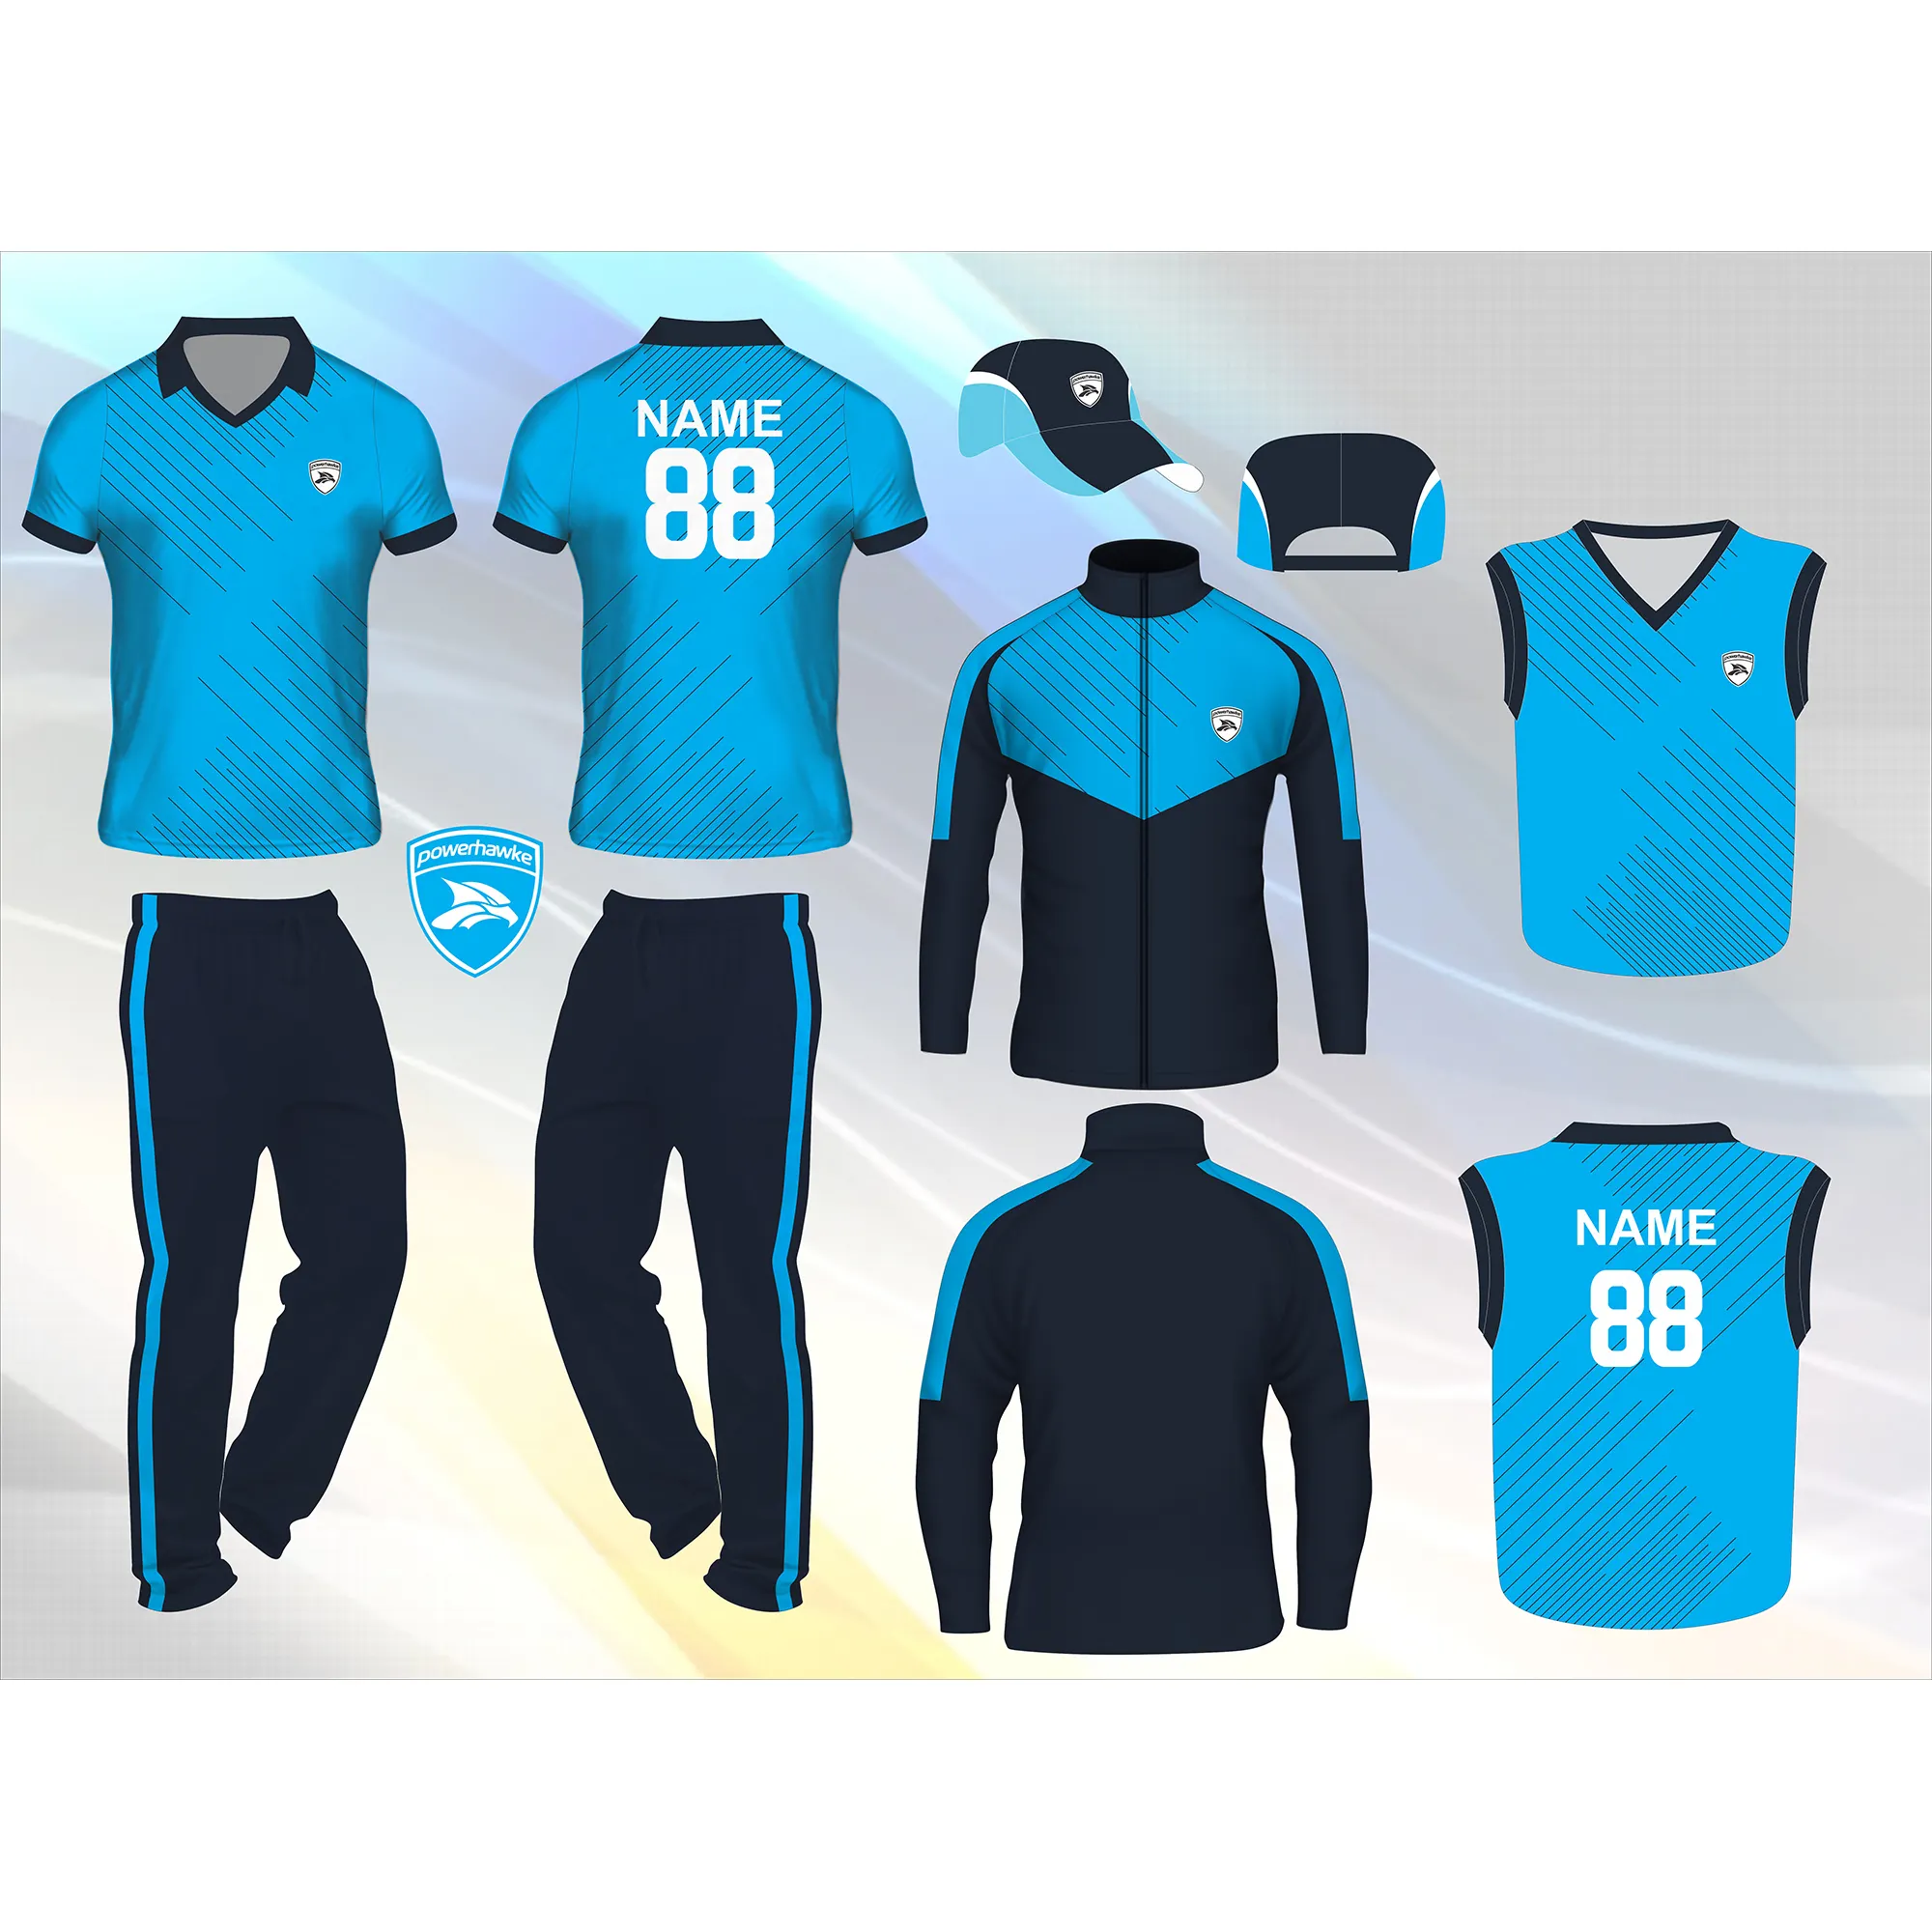 Premium Quality New Model Best Custom Logo Print Design Cricket Jerseys With Cricket Jacket and Cricket Jumper